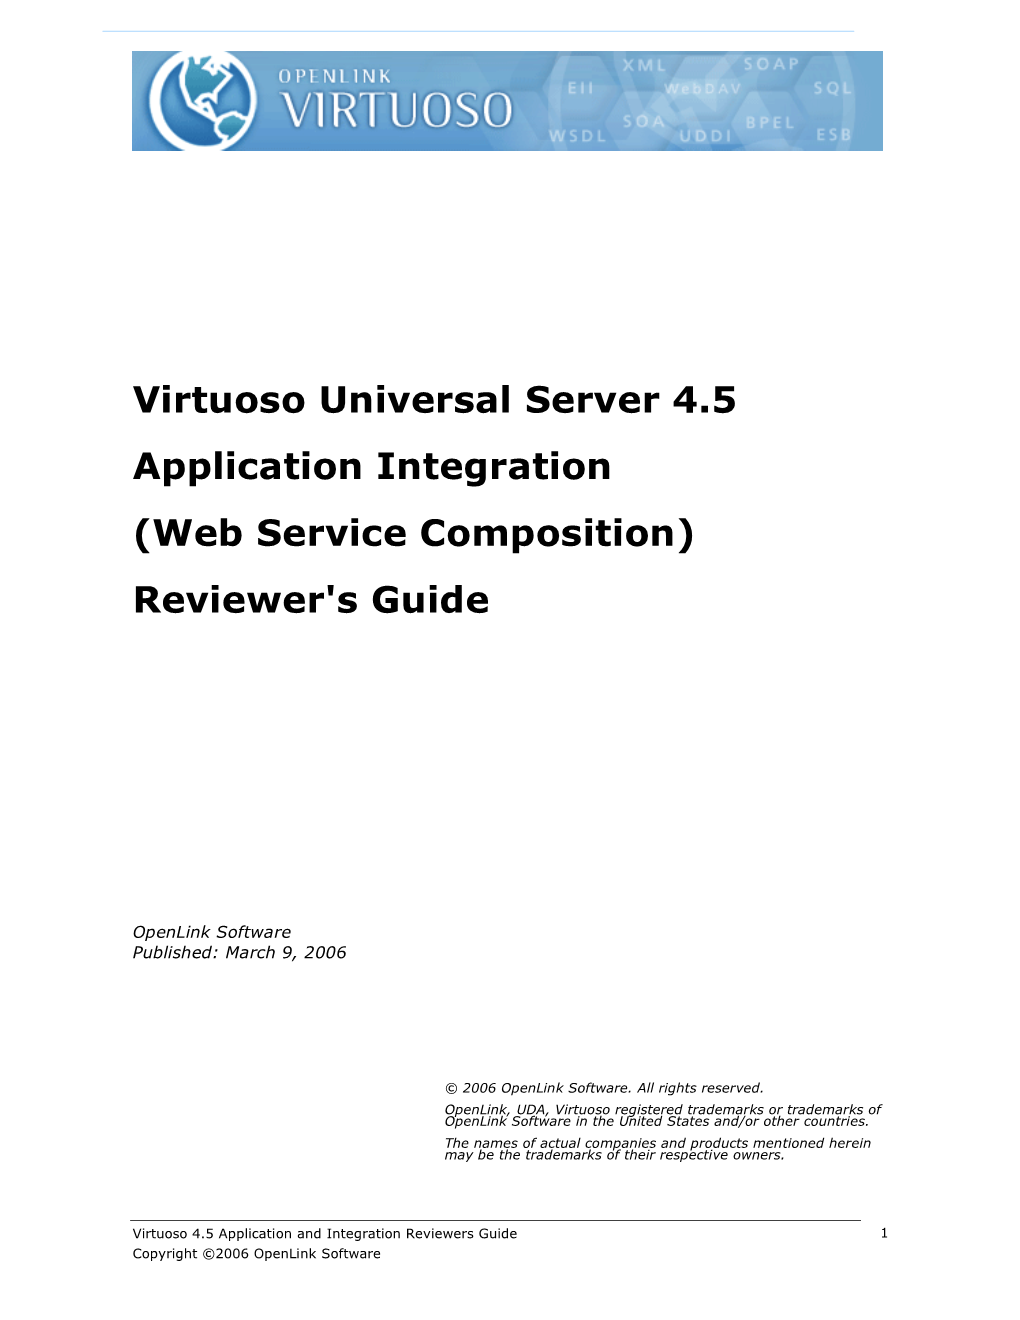 Virtuoso Universal Server 4.5 Application Integration (Web Service Composition) Reviewer's Guide